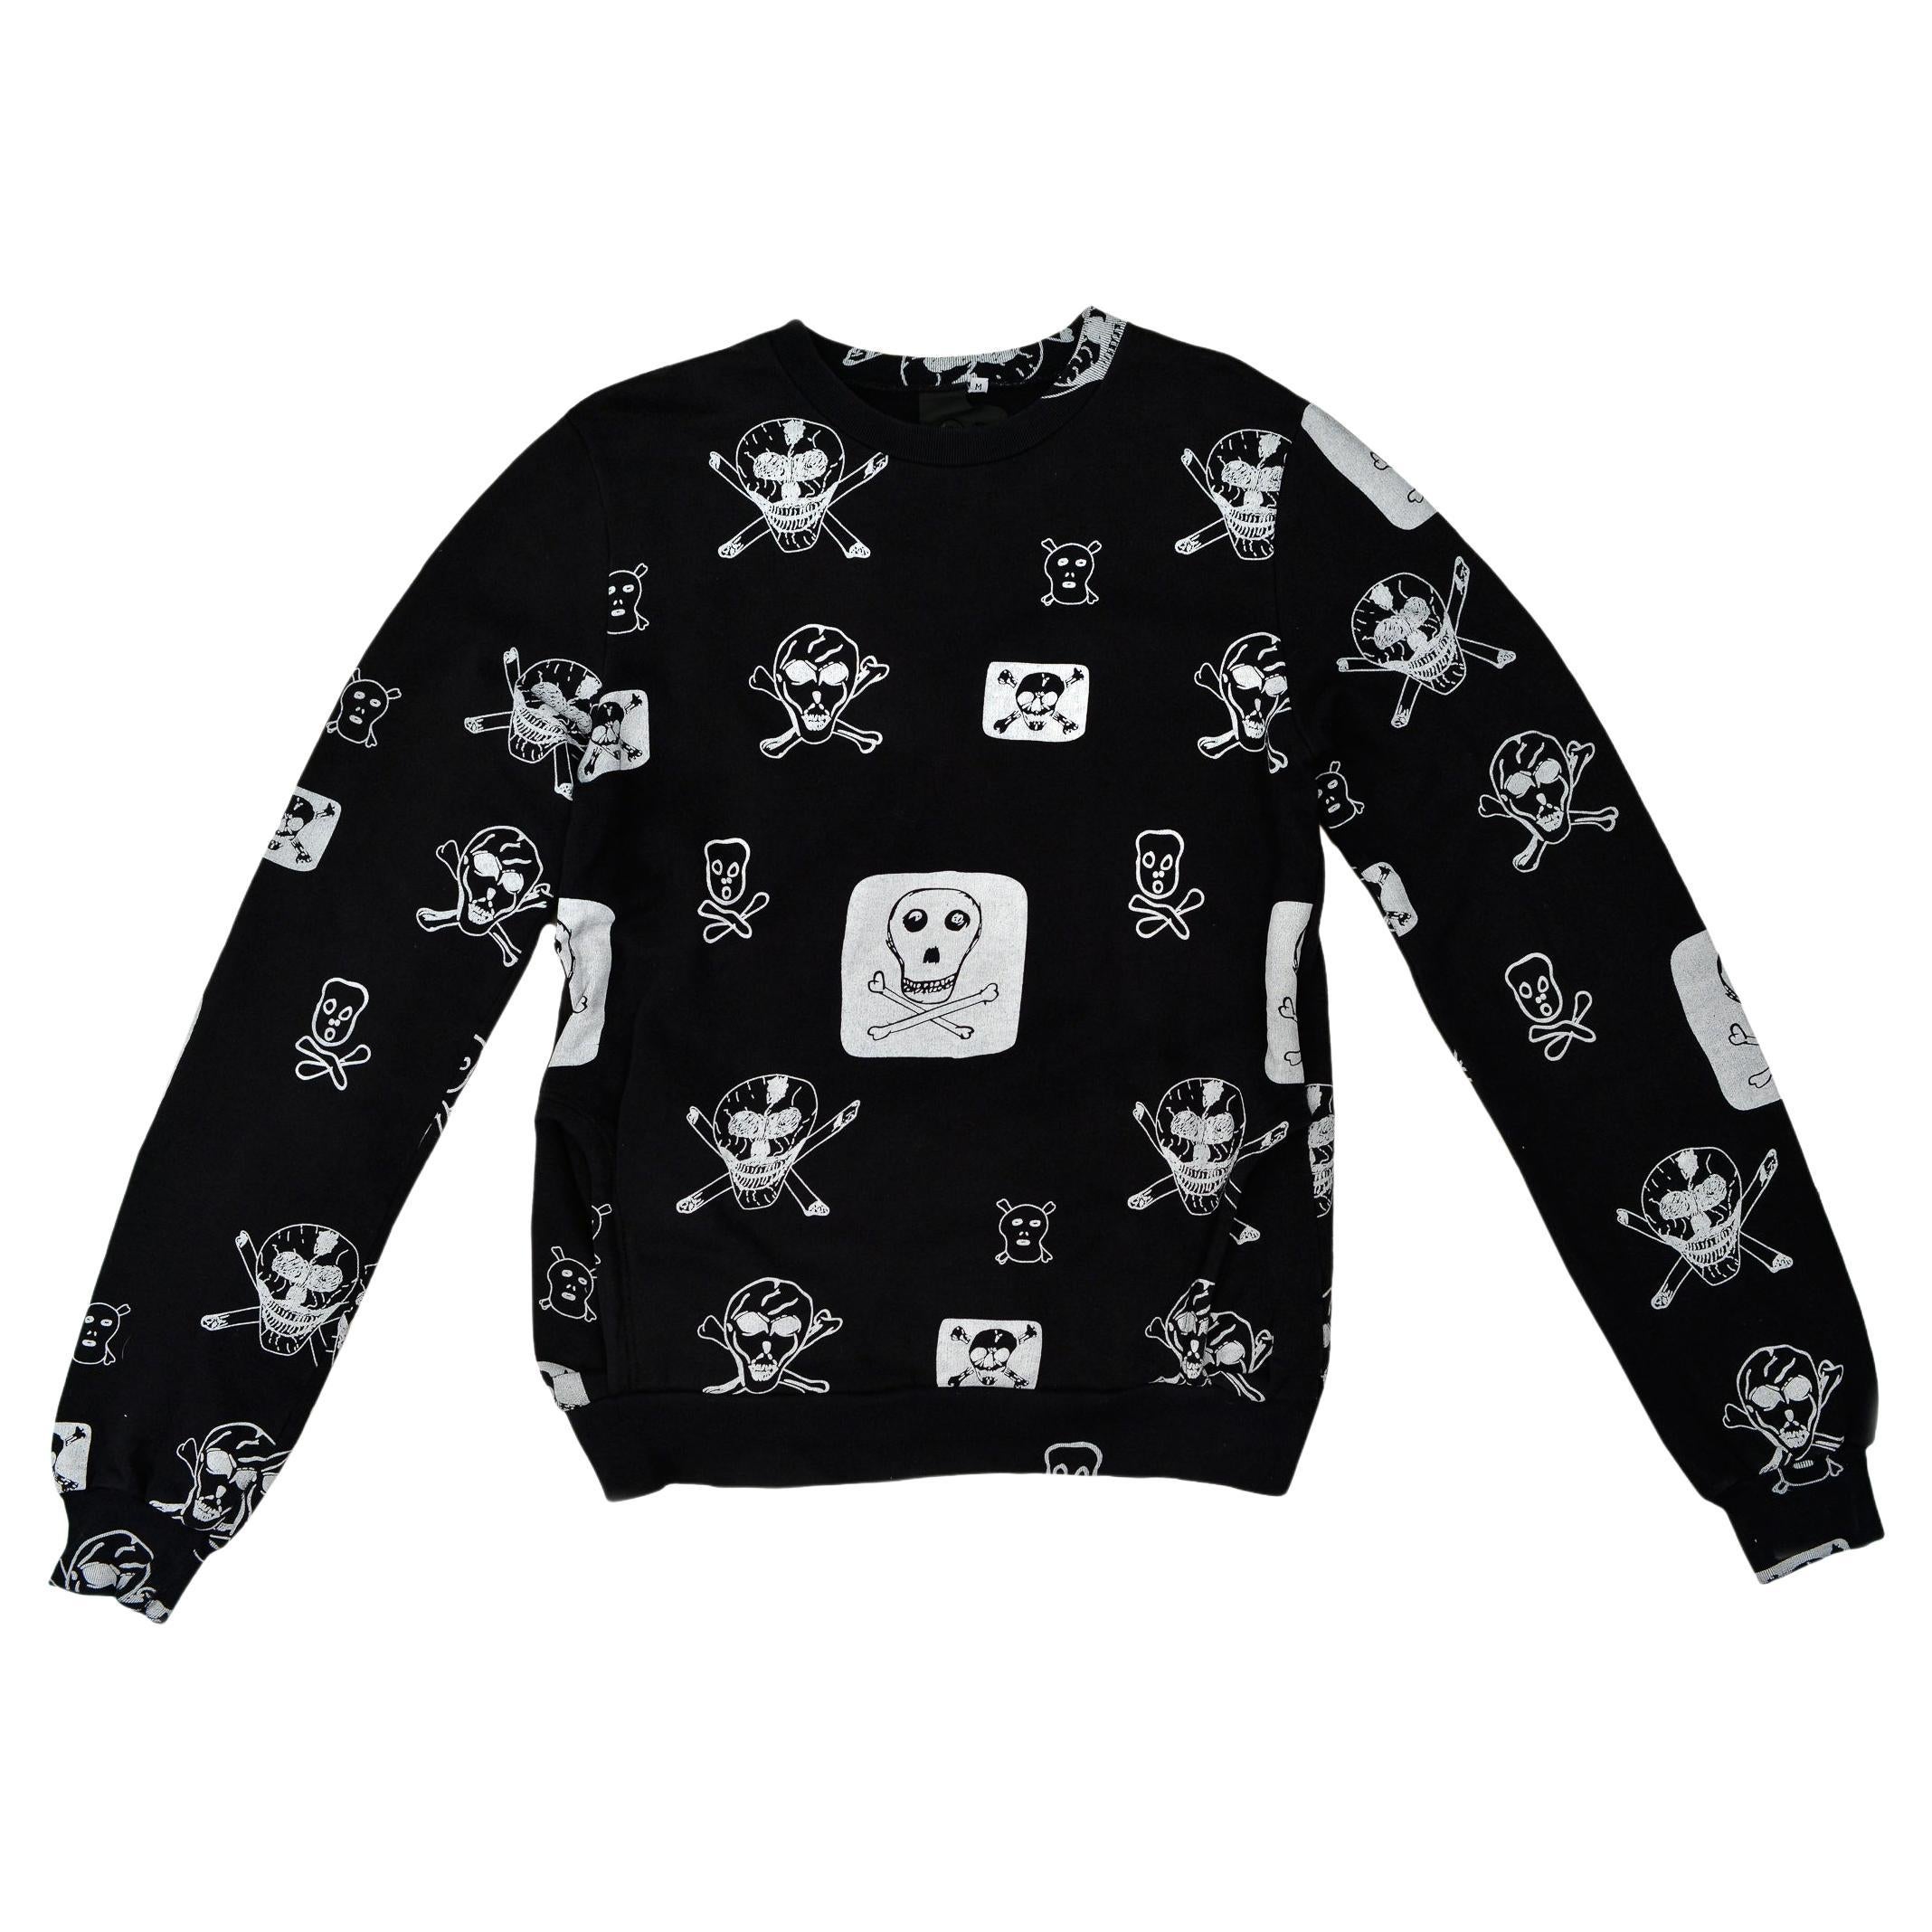 Bernhard Willhelm Black Skull & Crossbones Sweatshirt 2003 For Sale